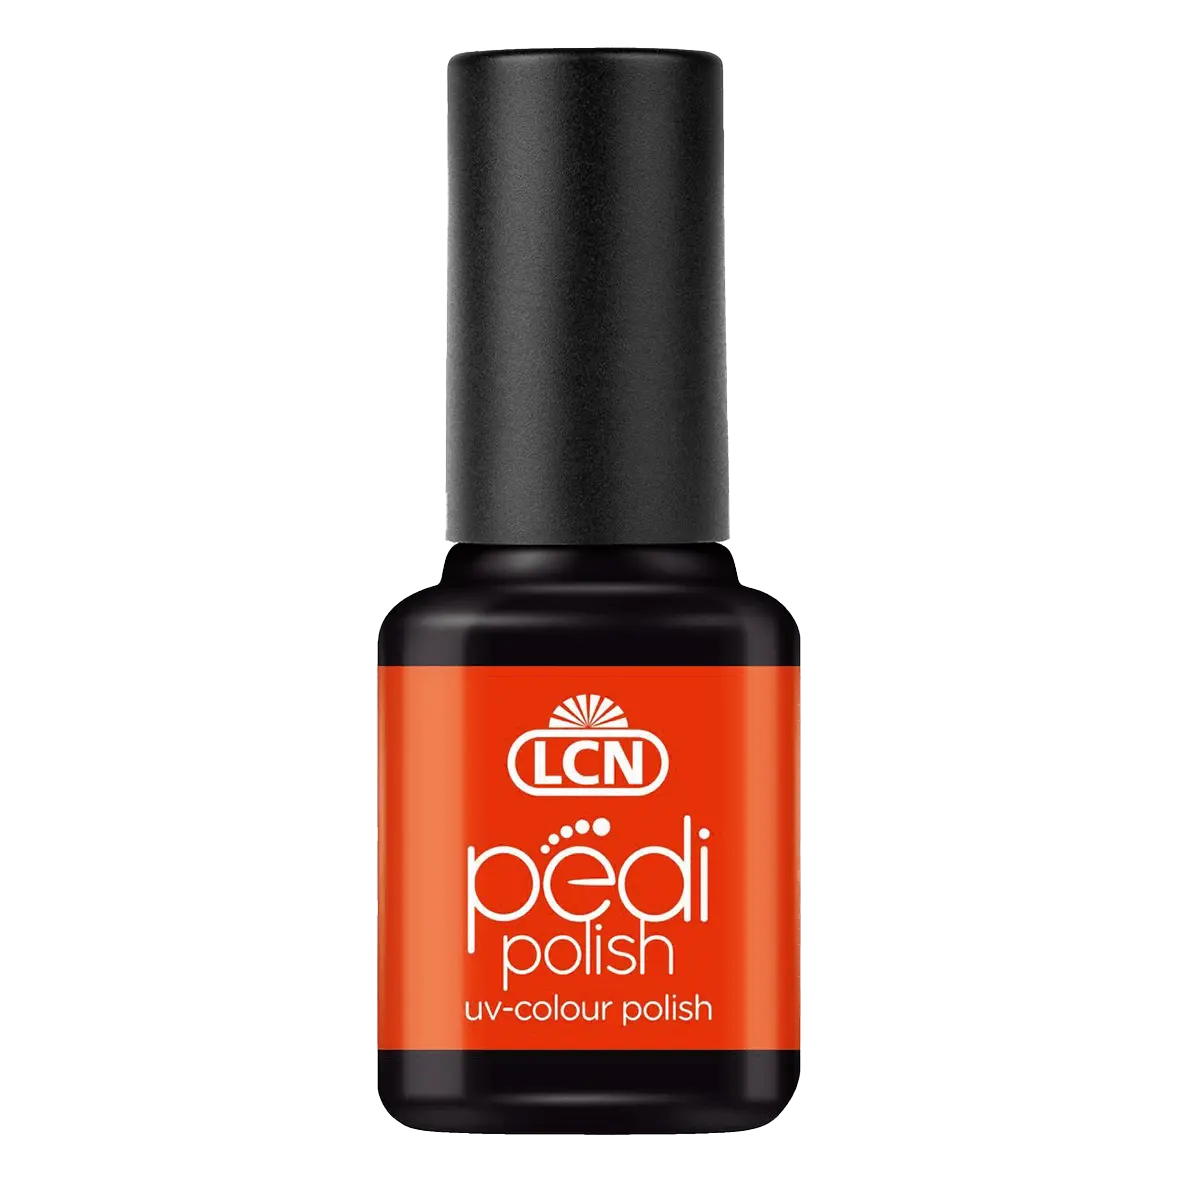 LCN Pedi Polish UV-Colour Polish - can´t help it - I love it! 8 ml